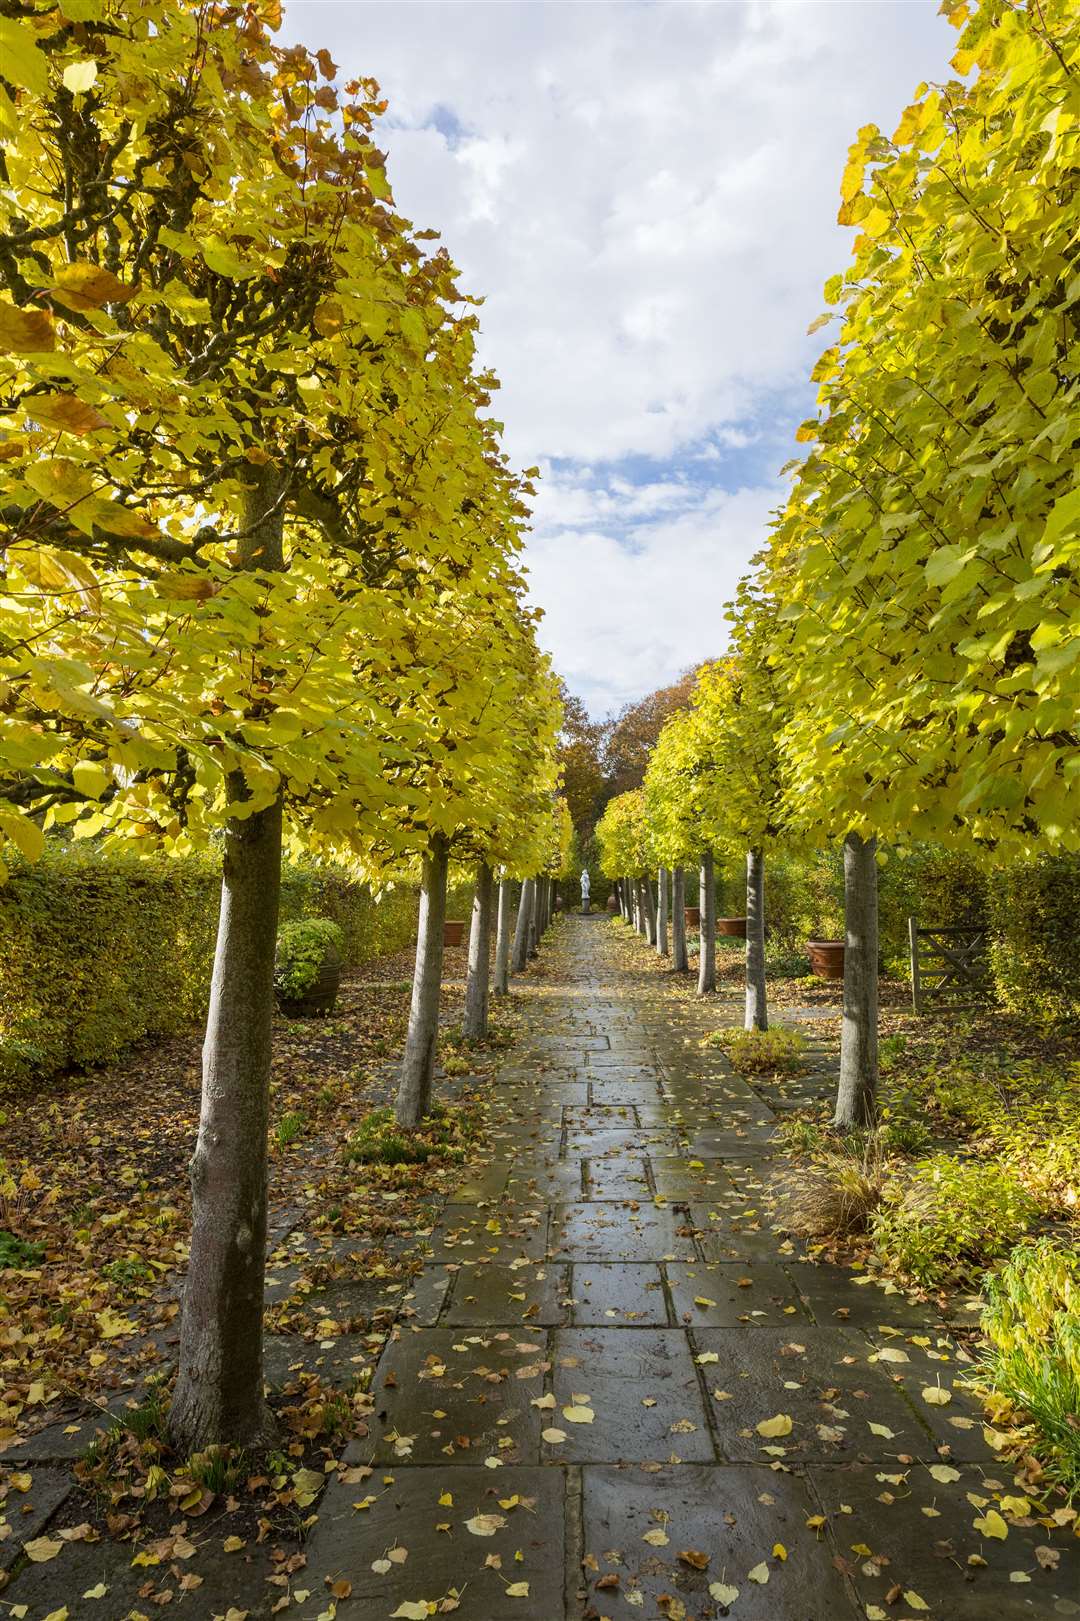 Golden avenue of trees in the gardens at Sissinghurst Castle Garden Picture: National Trust/James Dobson